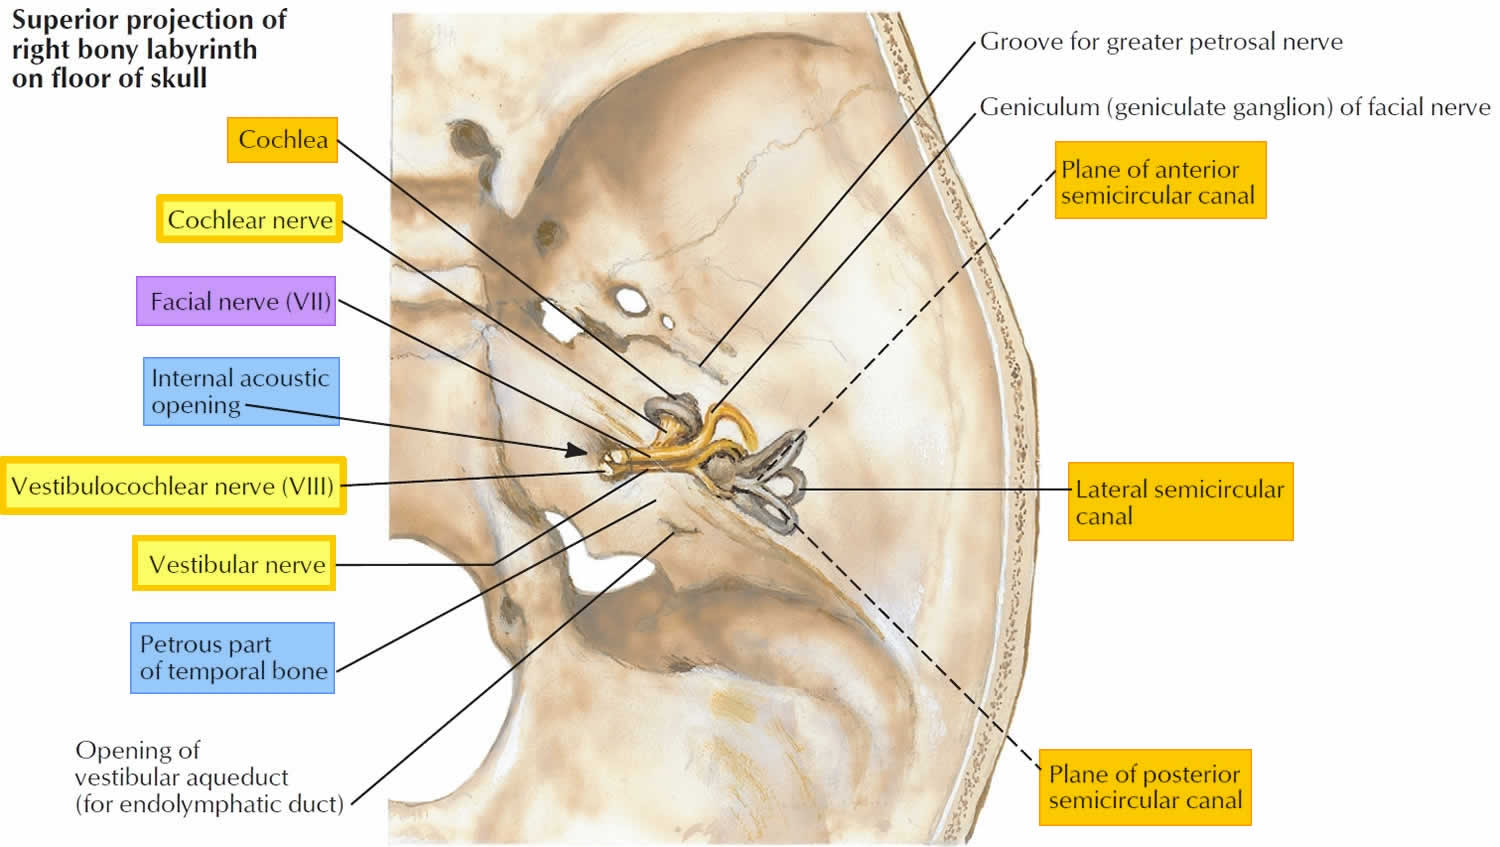 Vestibulocochlear nerve in the petrous temporal bone